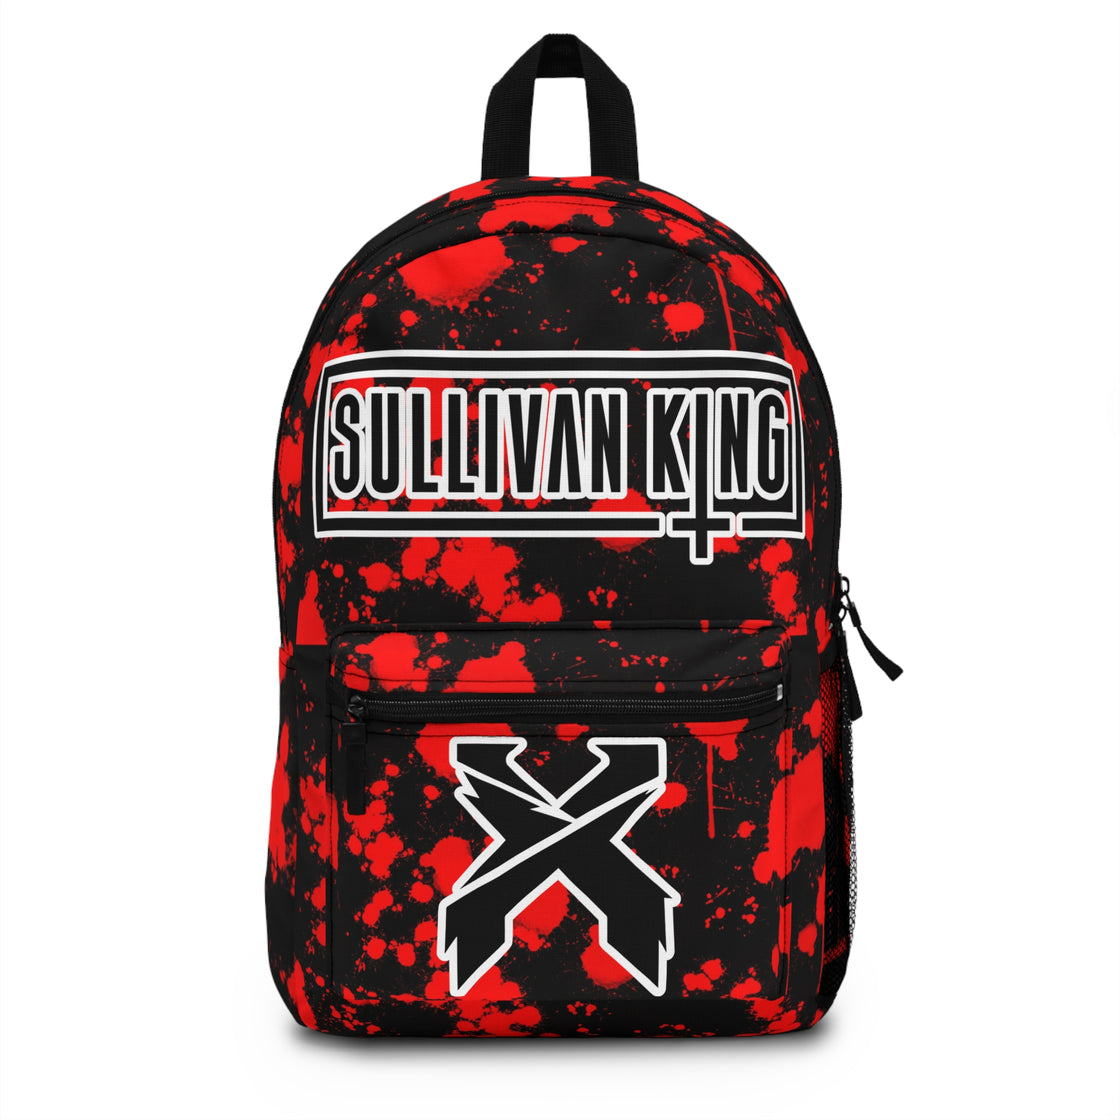 Sullivan King Excision Festival Backpack